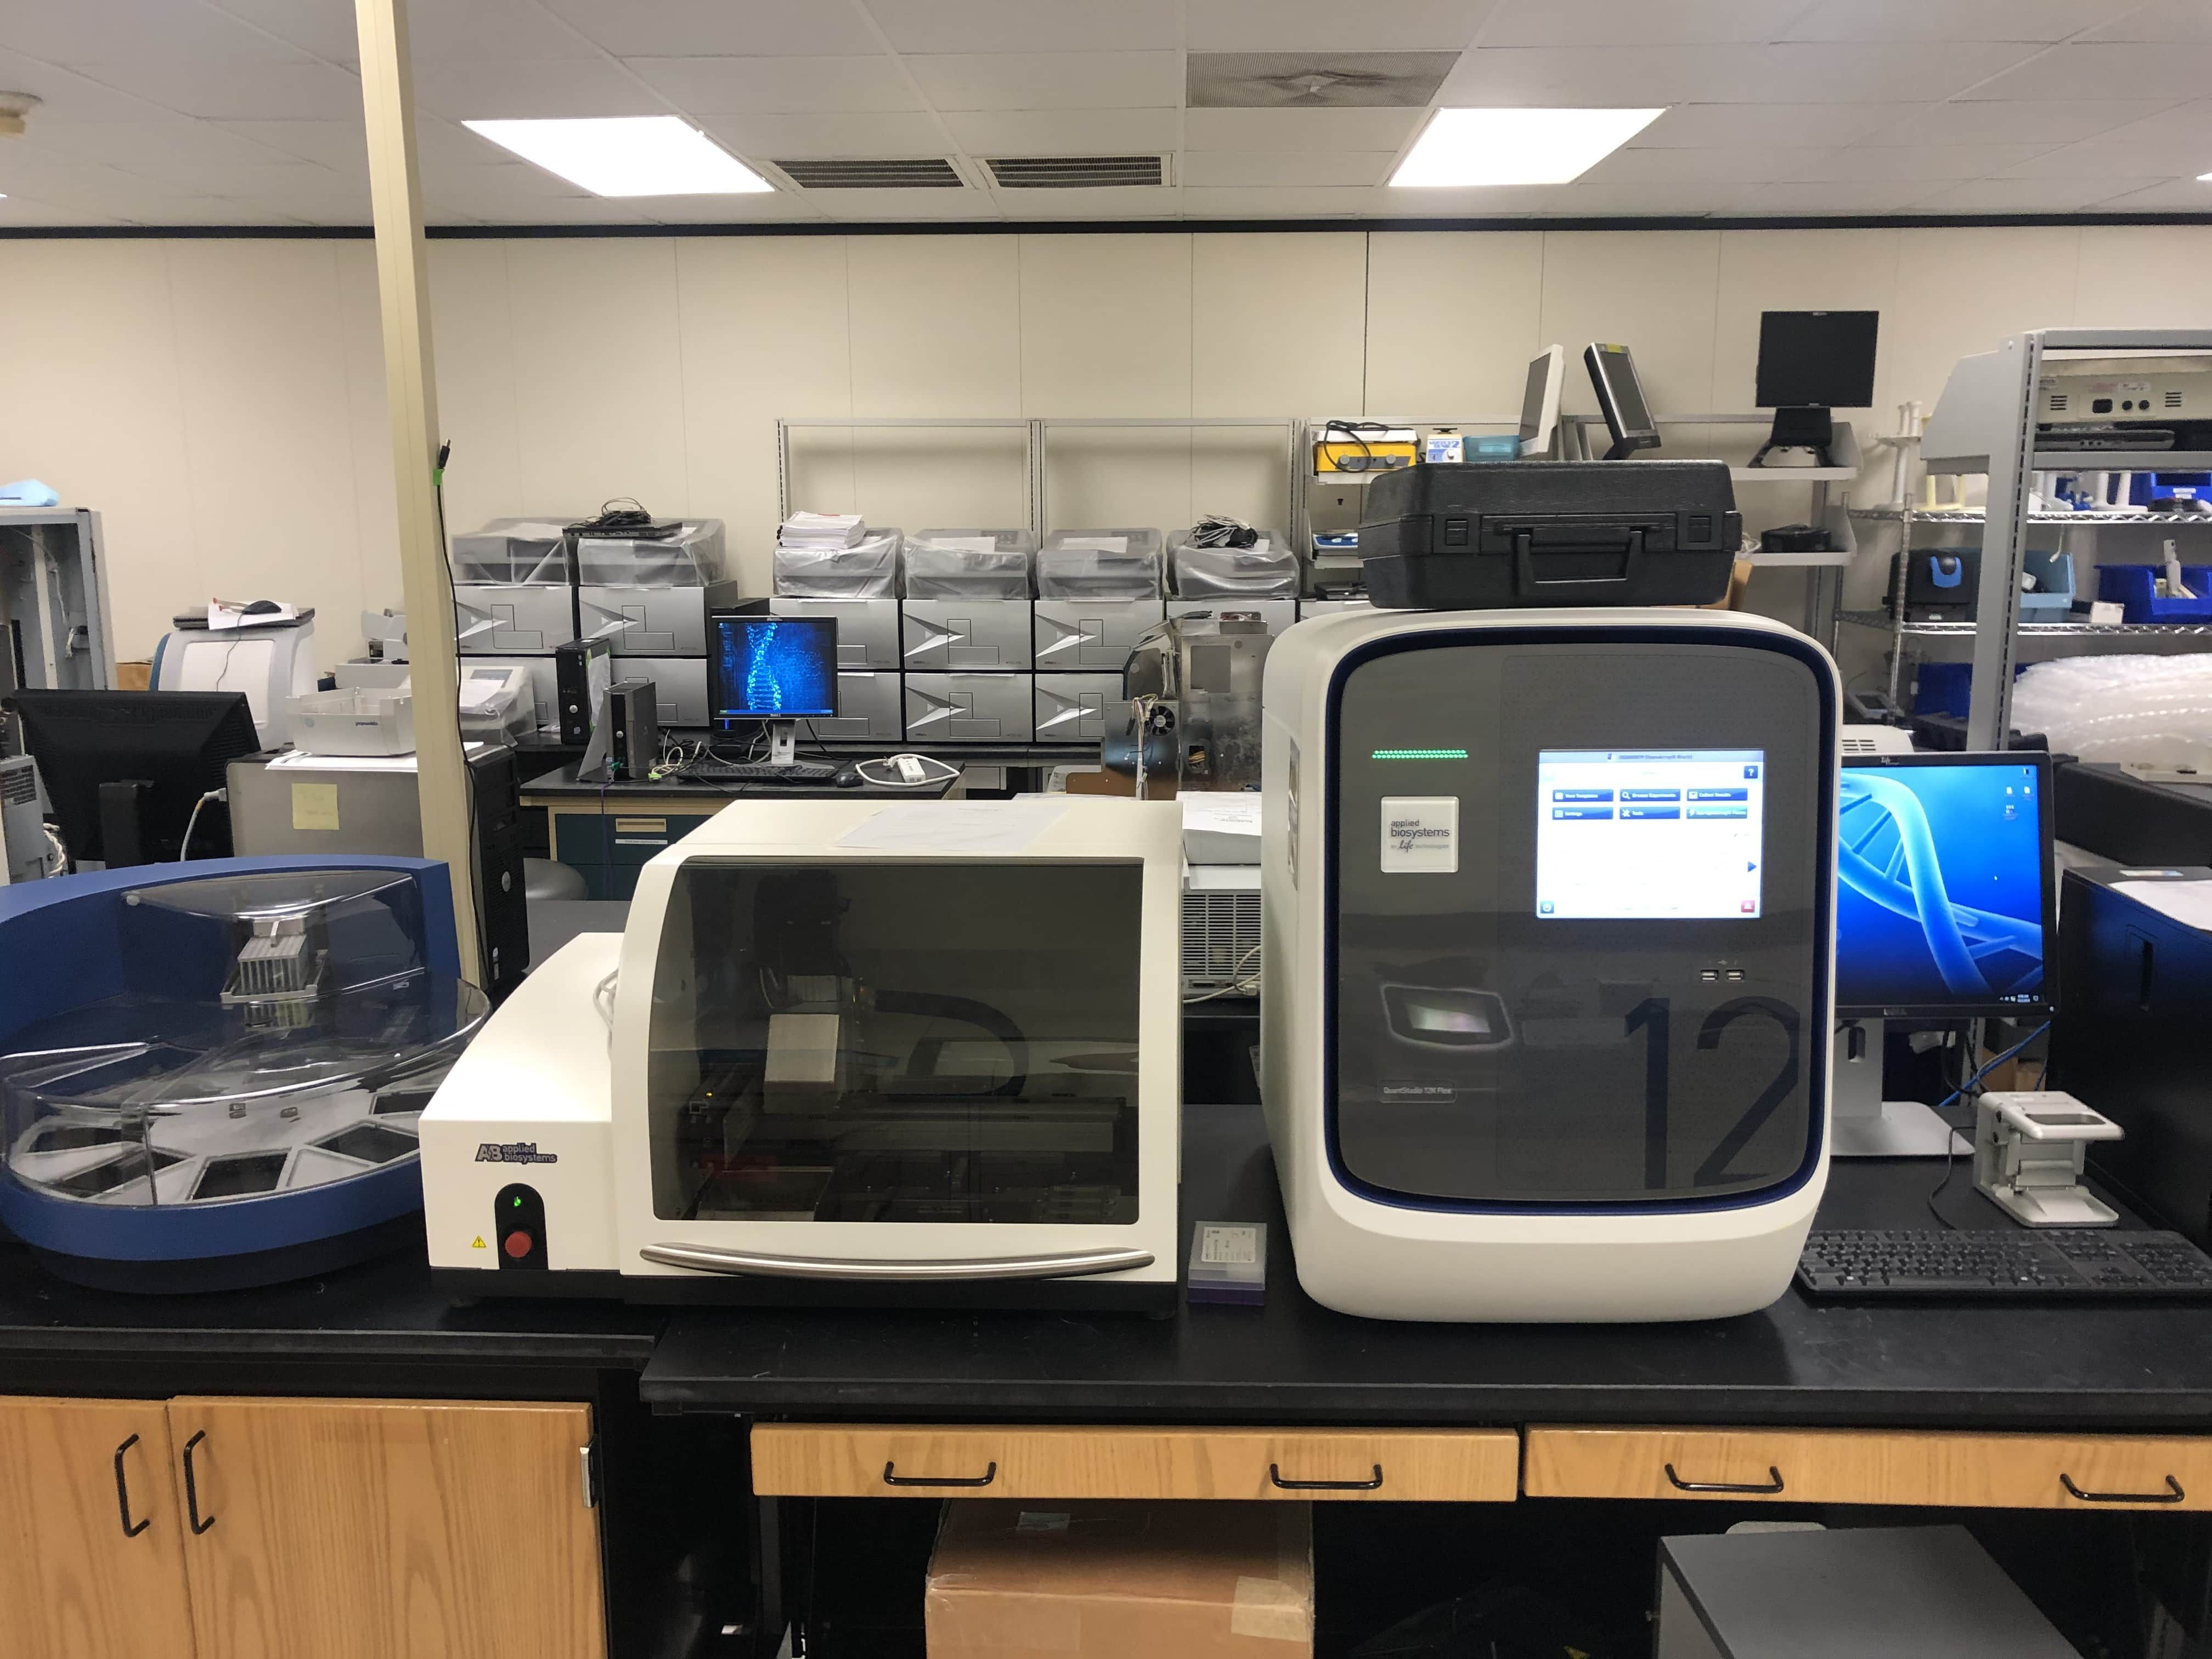 QuantStudio 12 Flex Real-Time PCR Complete System